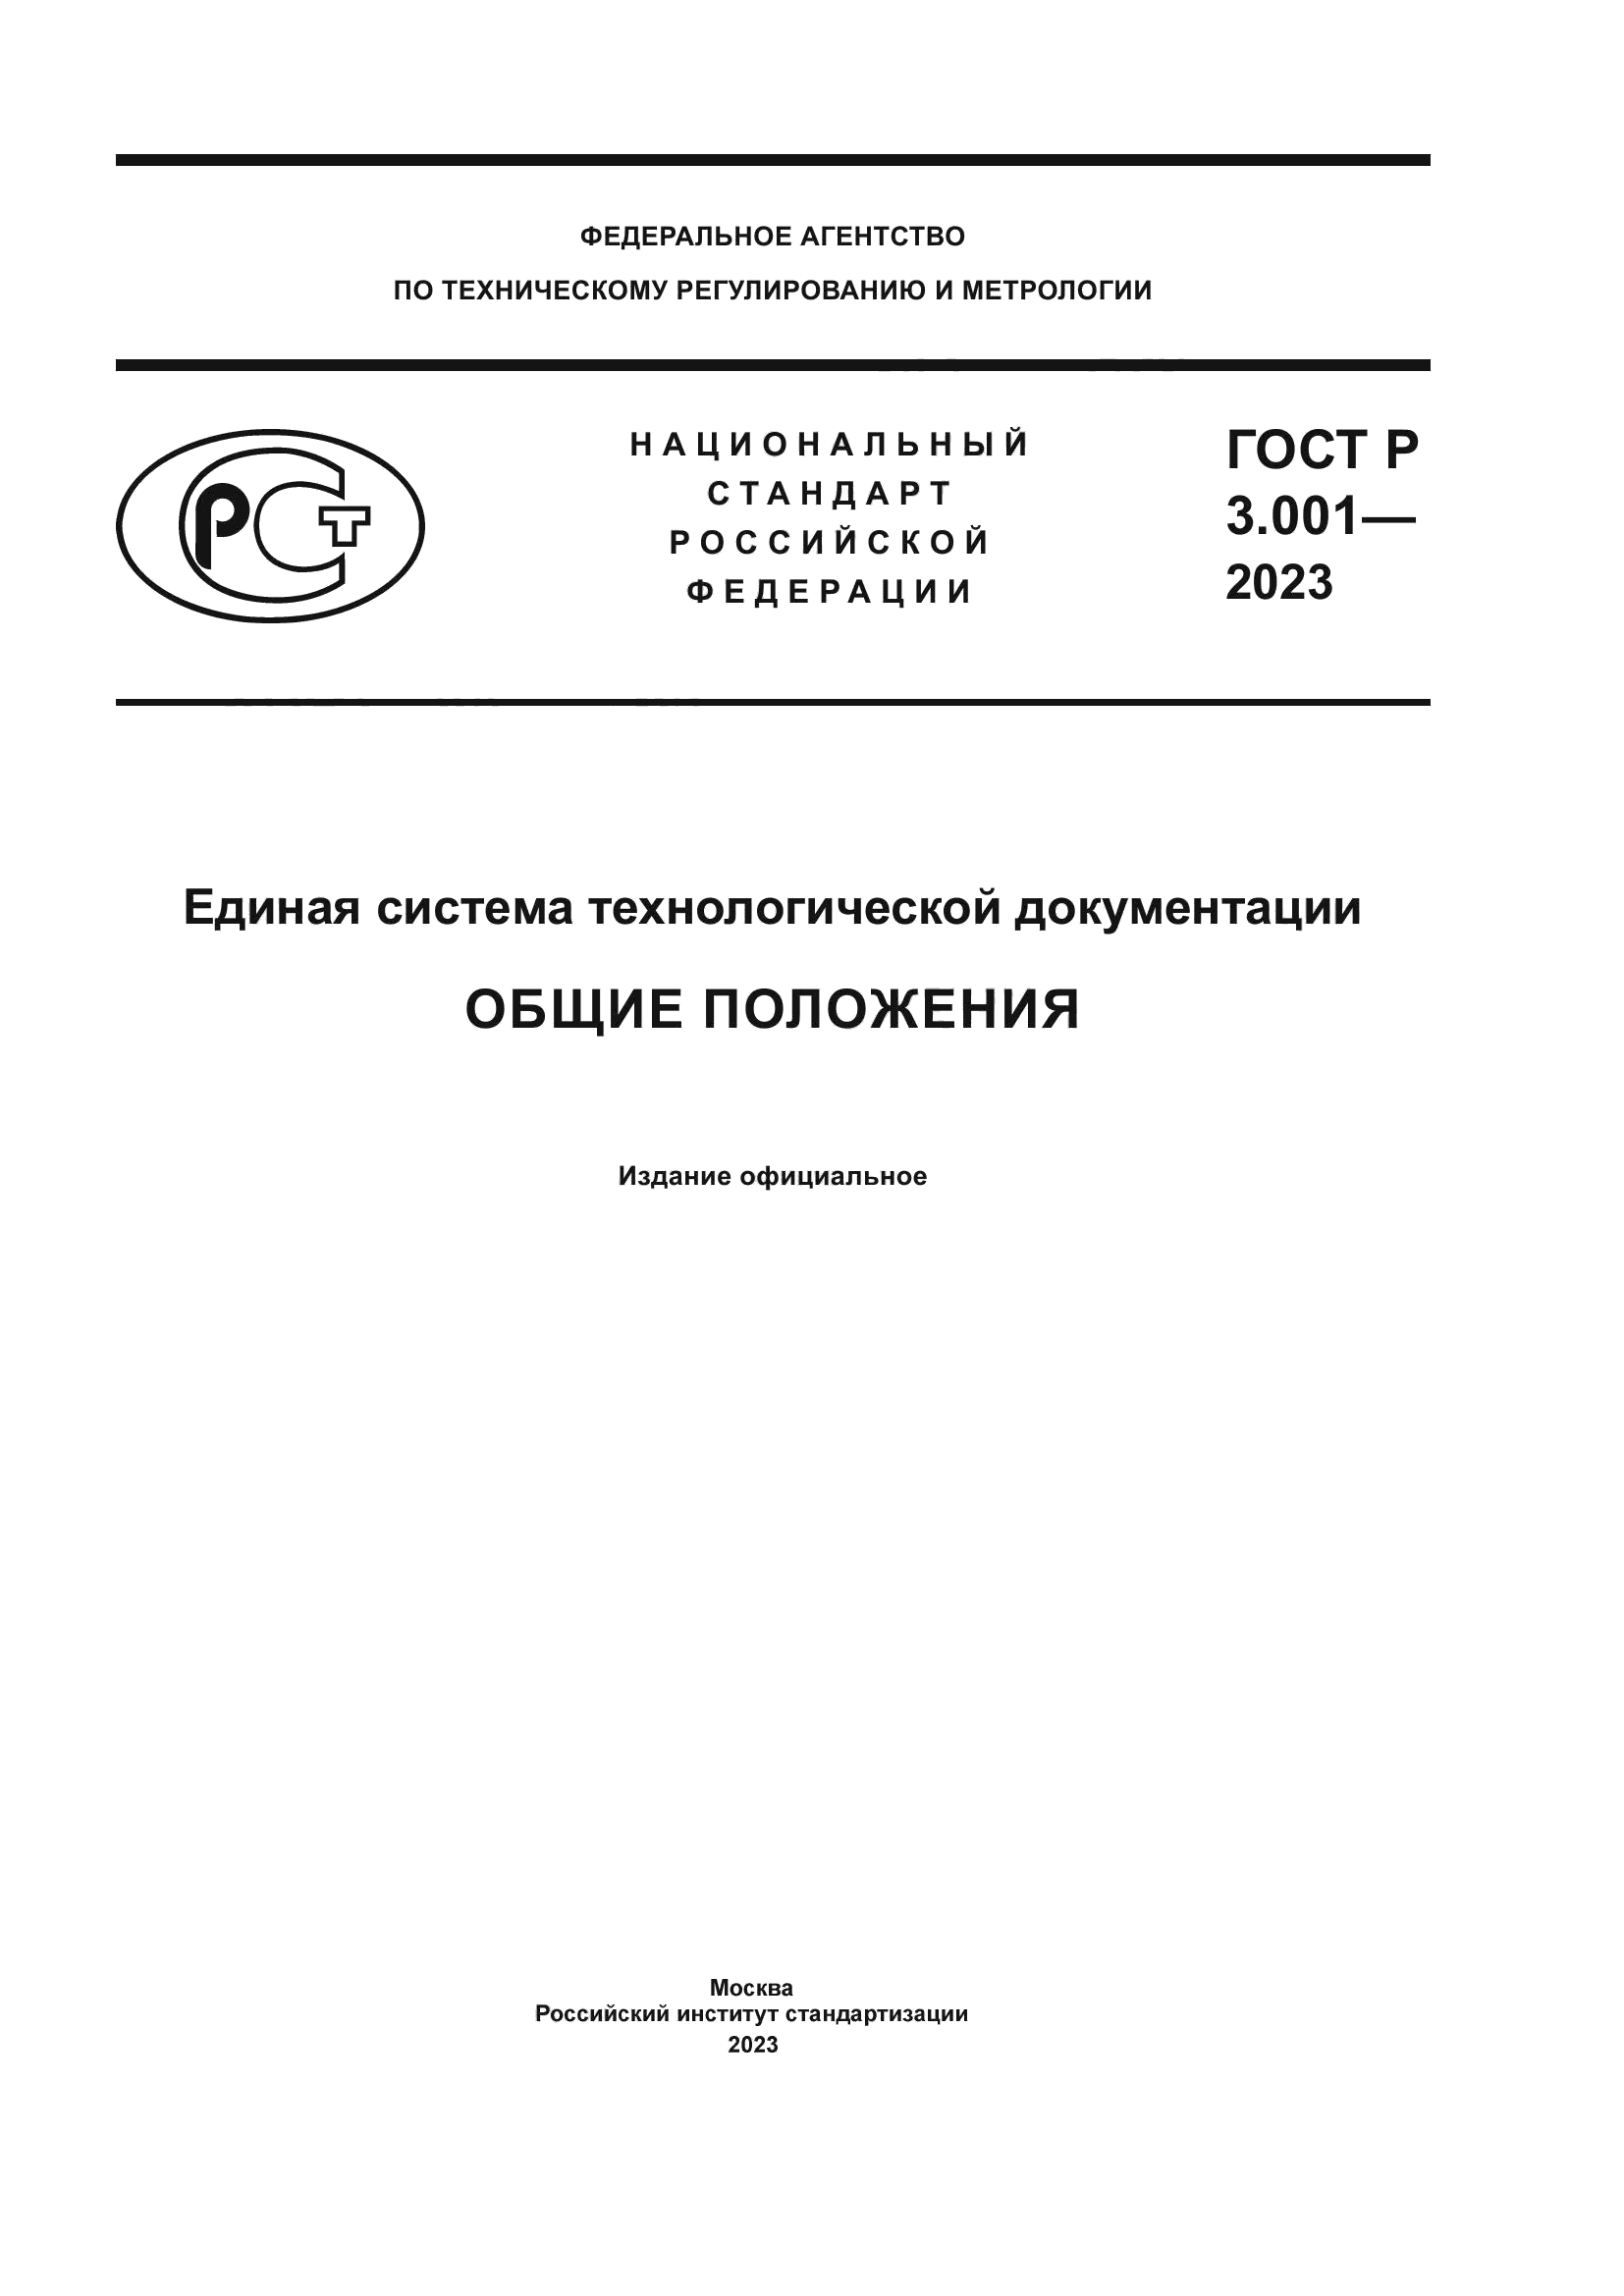 ГОСТ Р 3.001-2023